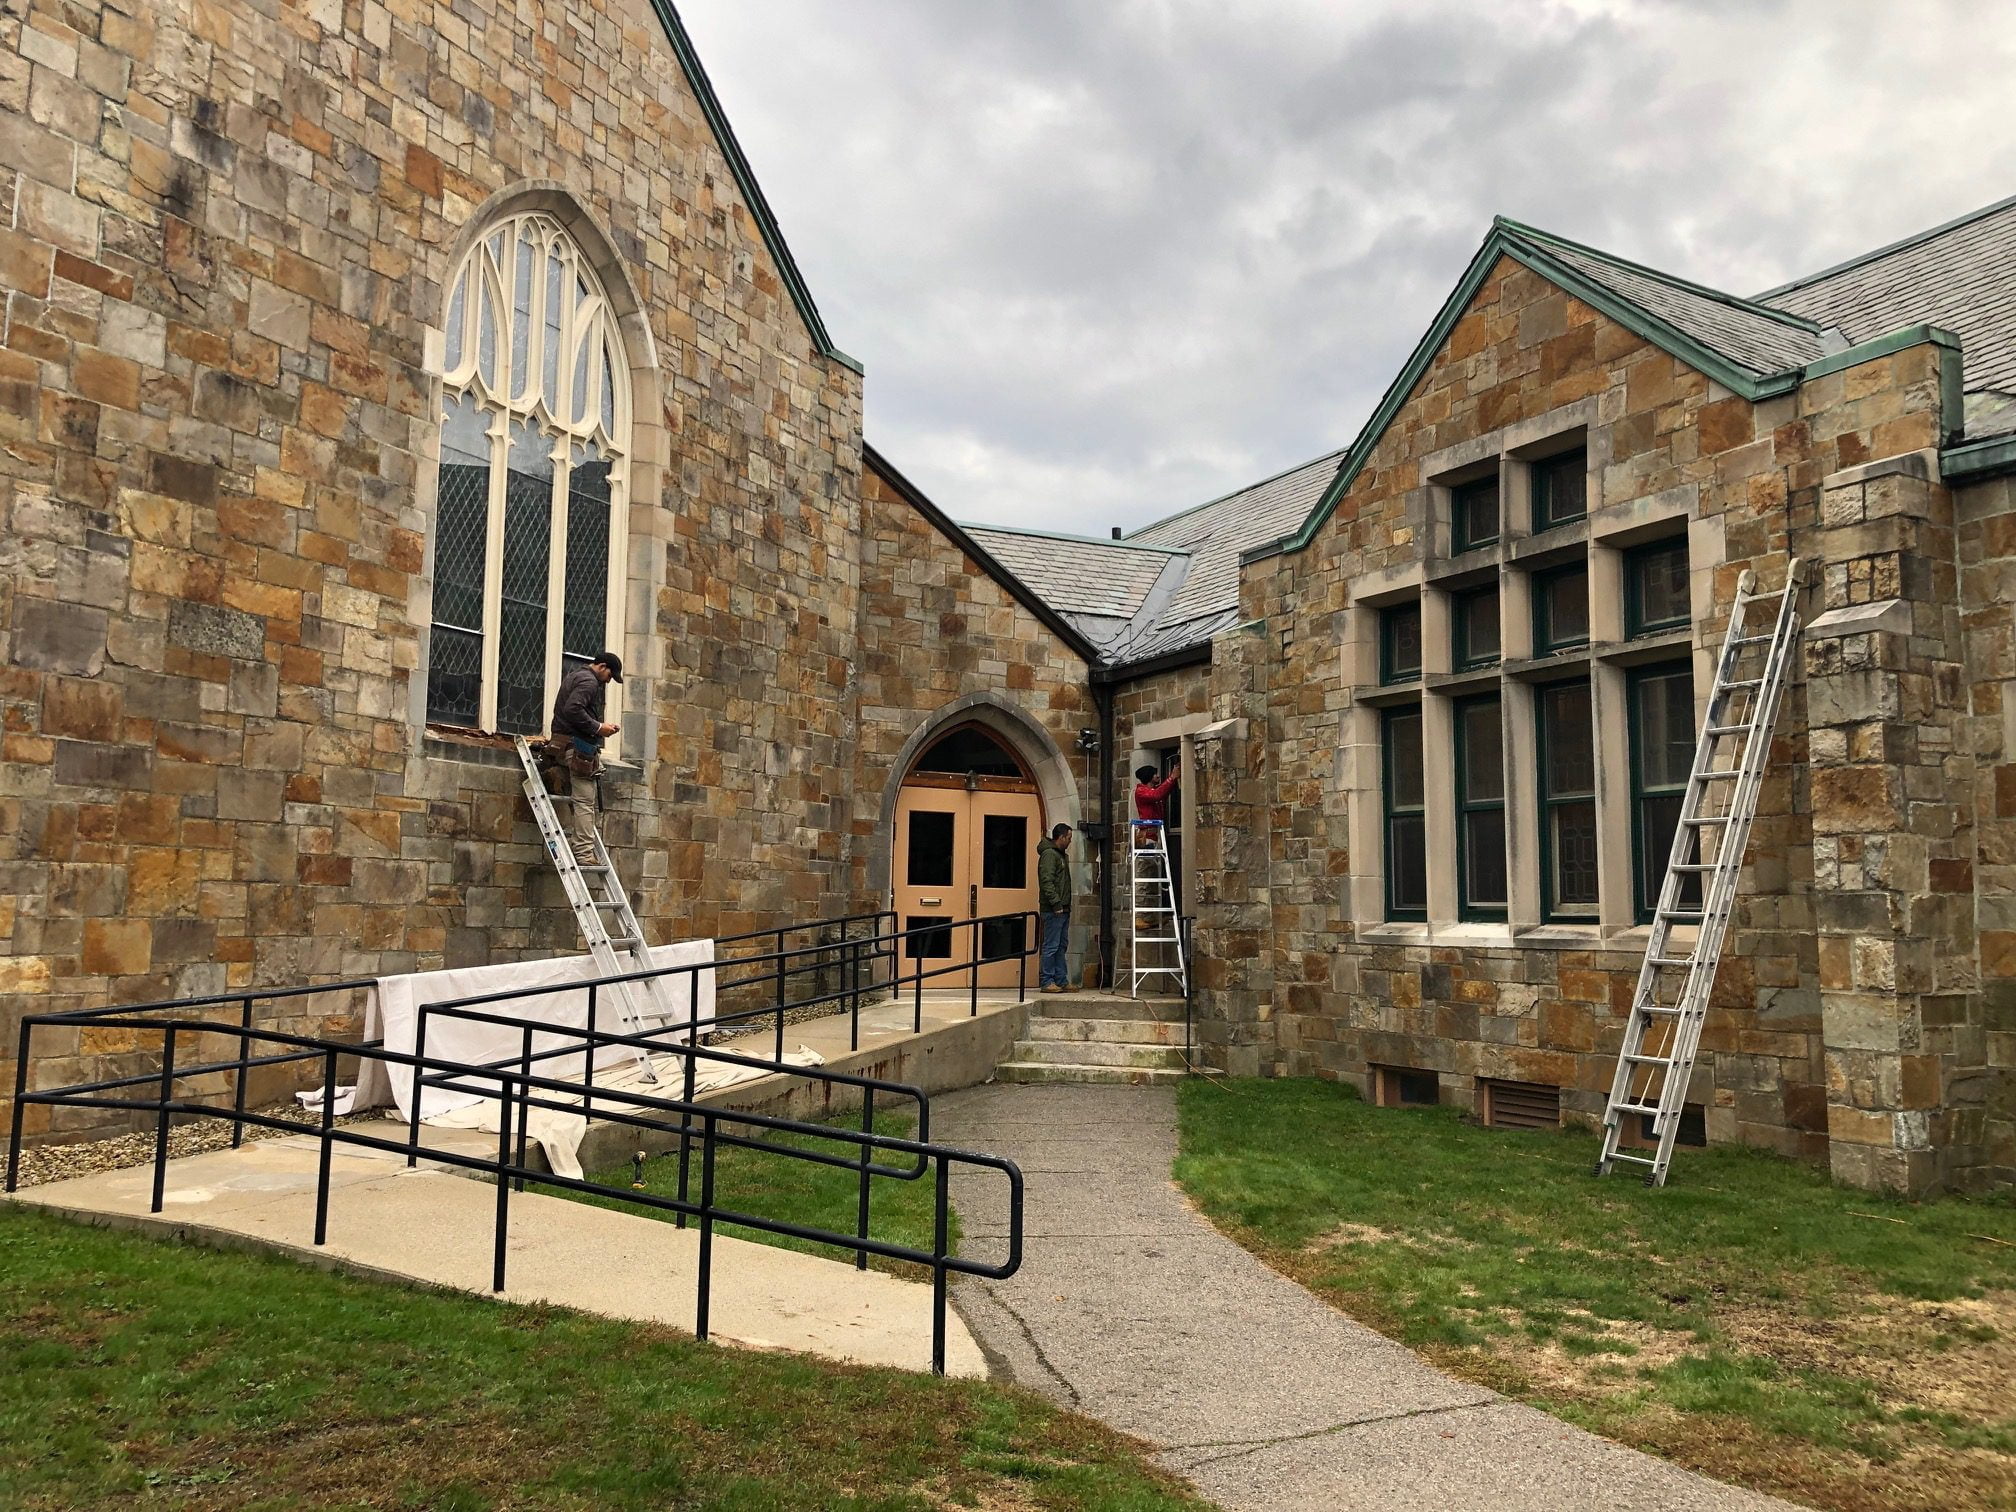 church windows with ladders undergoing repairs